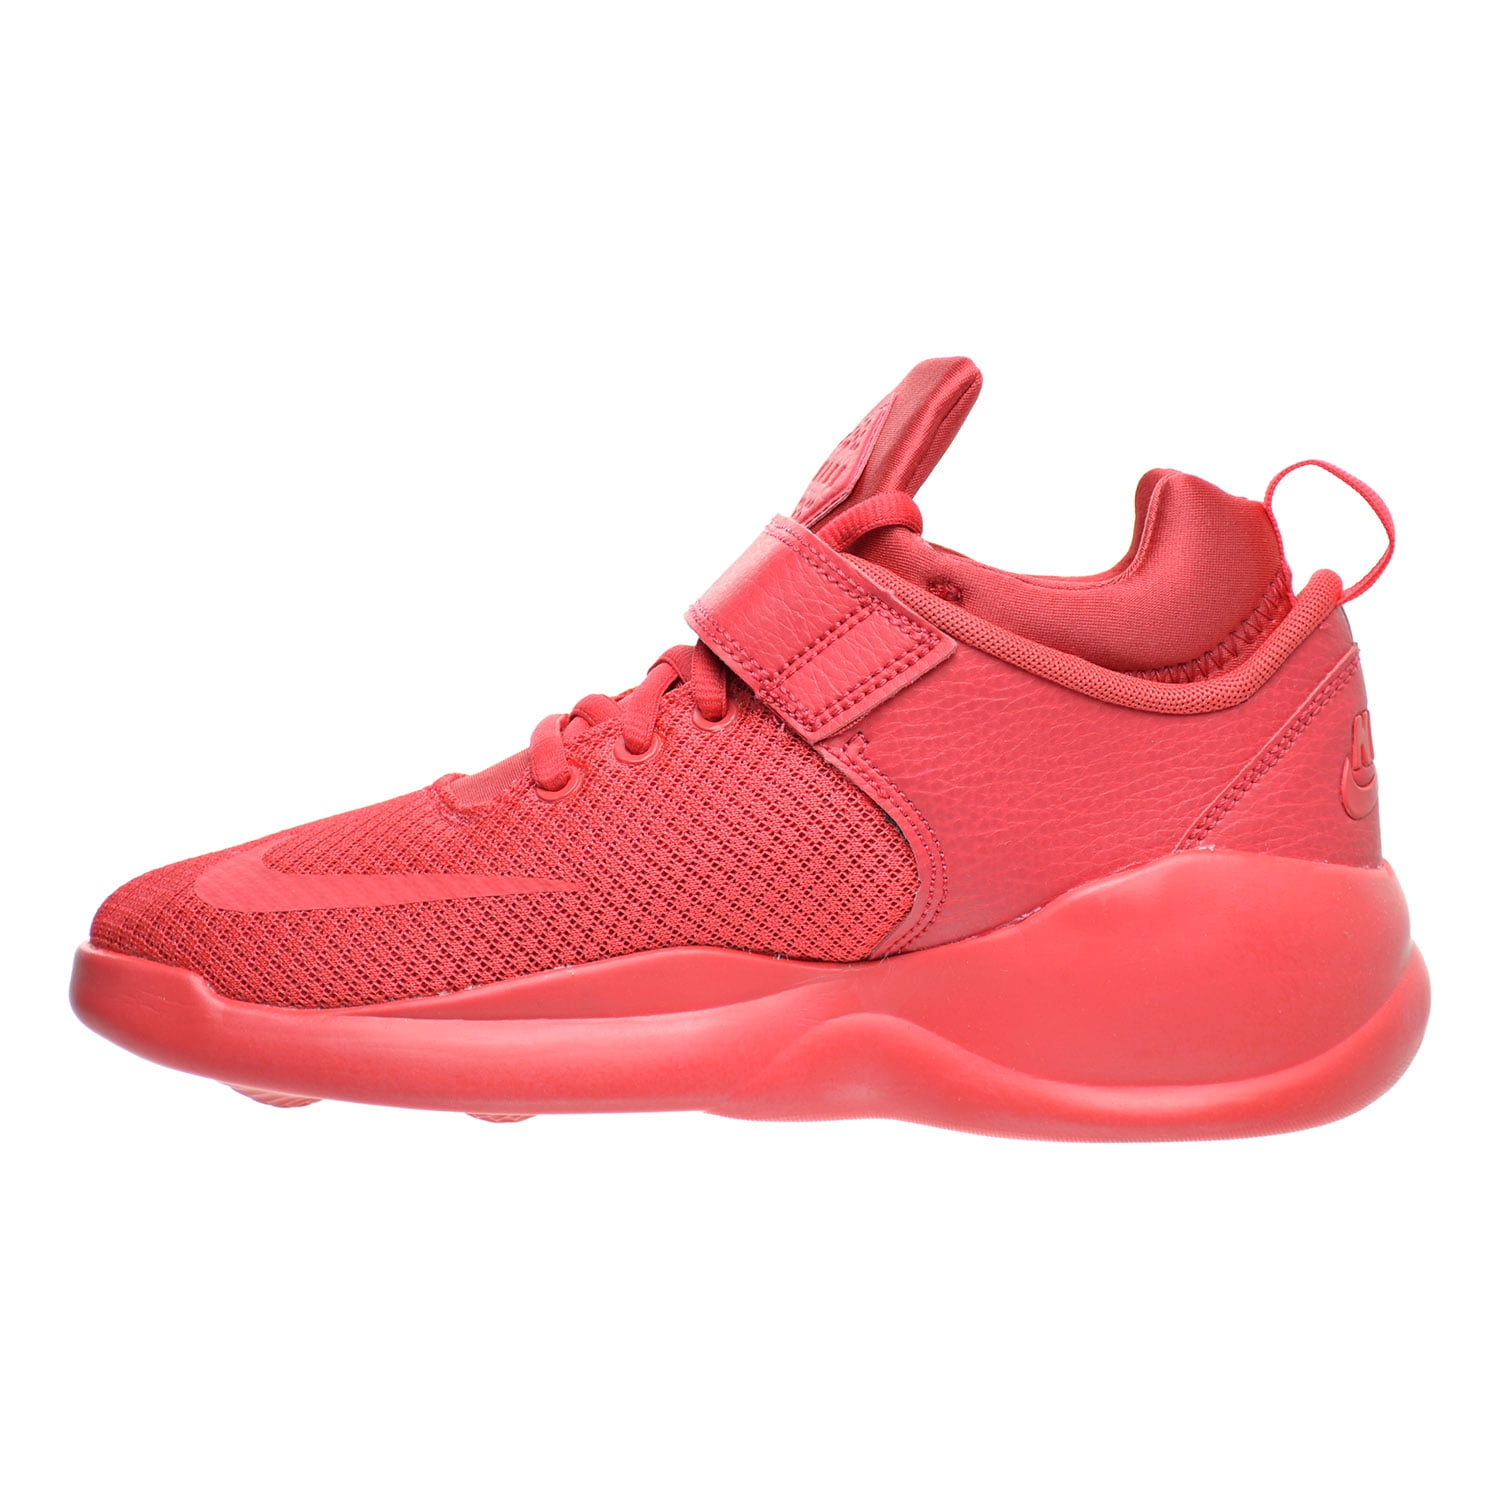 Heel boos beven storm Nike Kwazi (GS) Big Kid's Shoes Action Red/Action Red 845075-600 (6.5 M US)  - Walmart.com